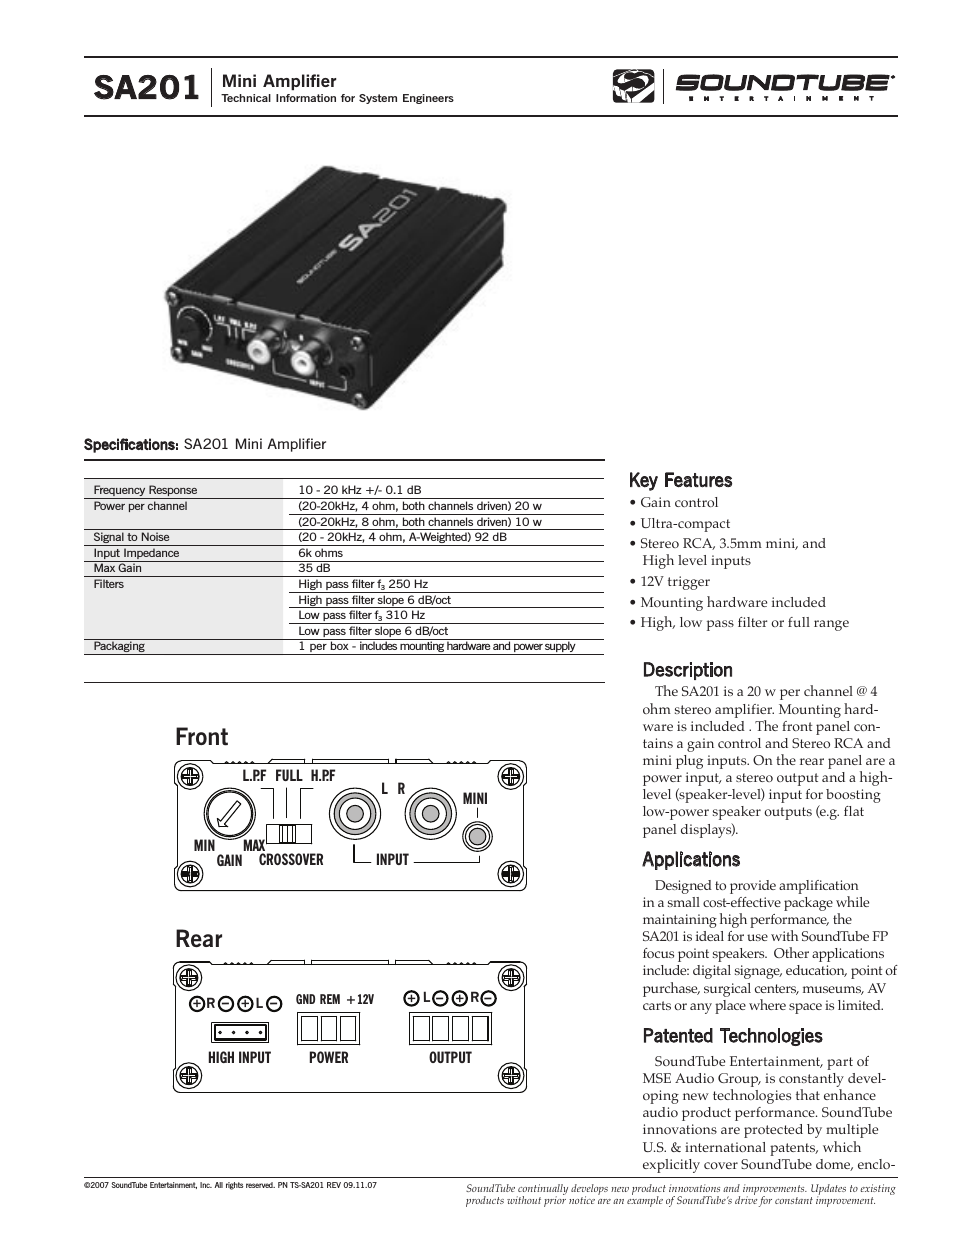 Mini Amplifier SA201